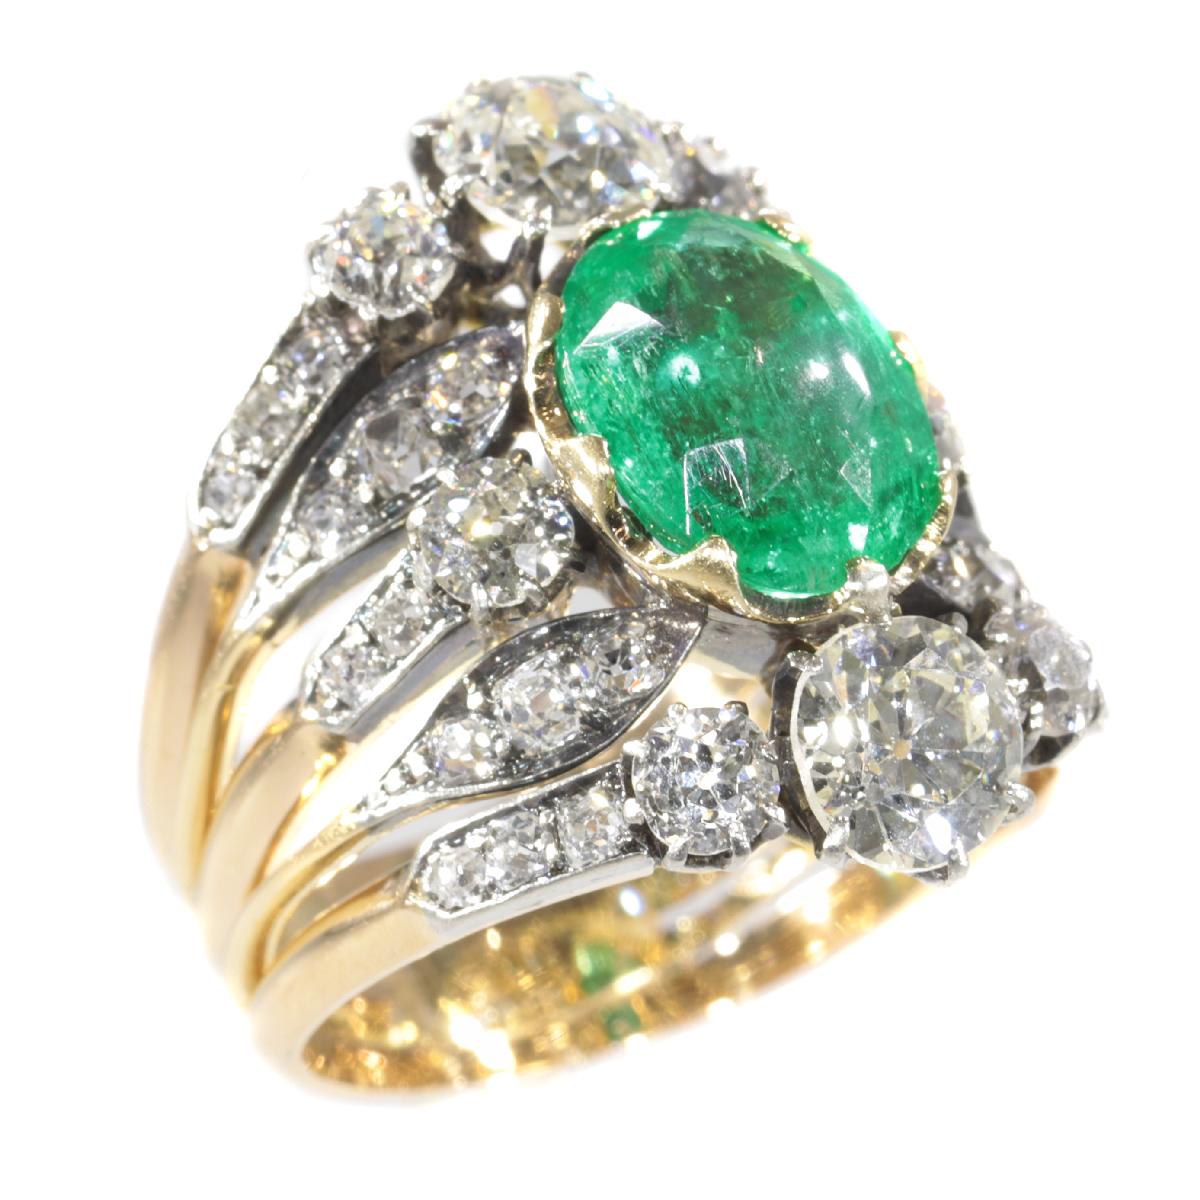 True Eyecatcher Victorian Antique Ring with a 3.50 Carat Ovalcut Emerald 6